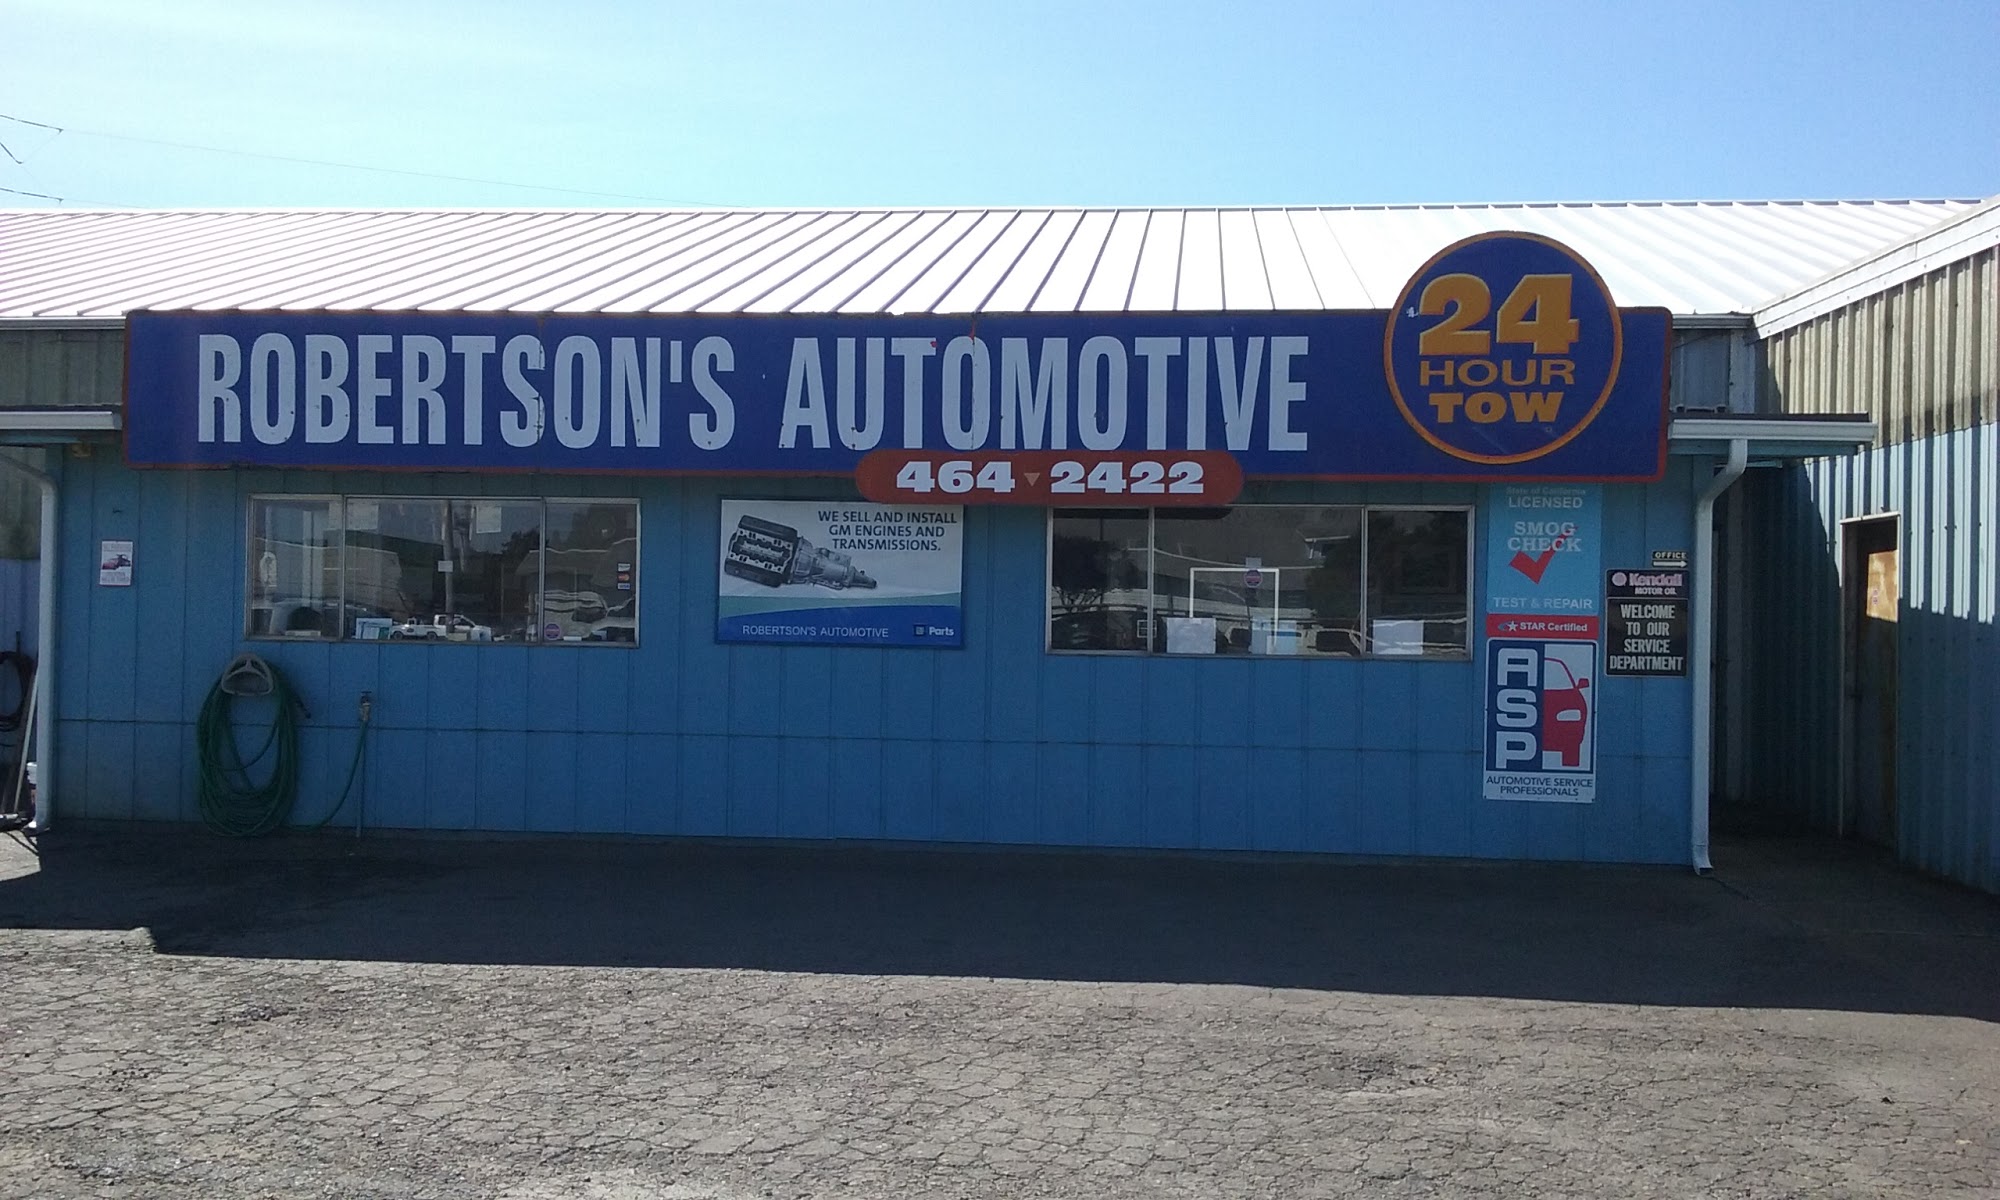 Robertson's Automotive